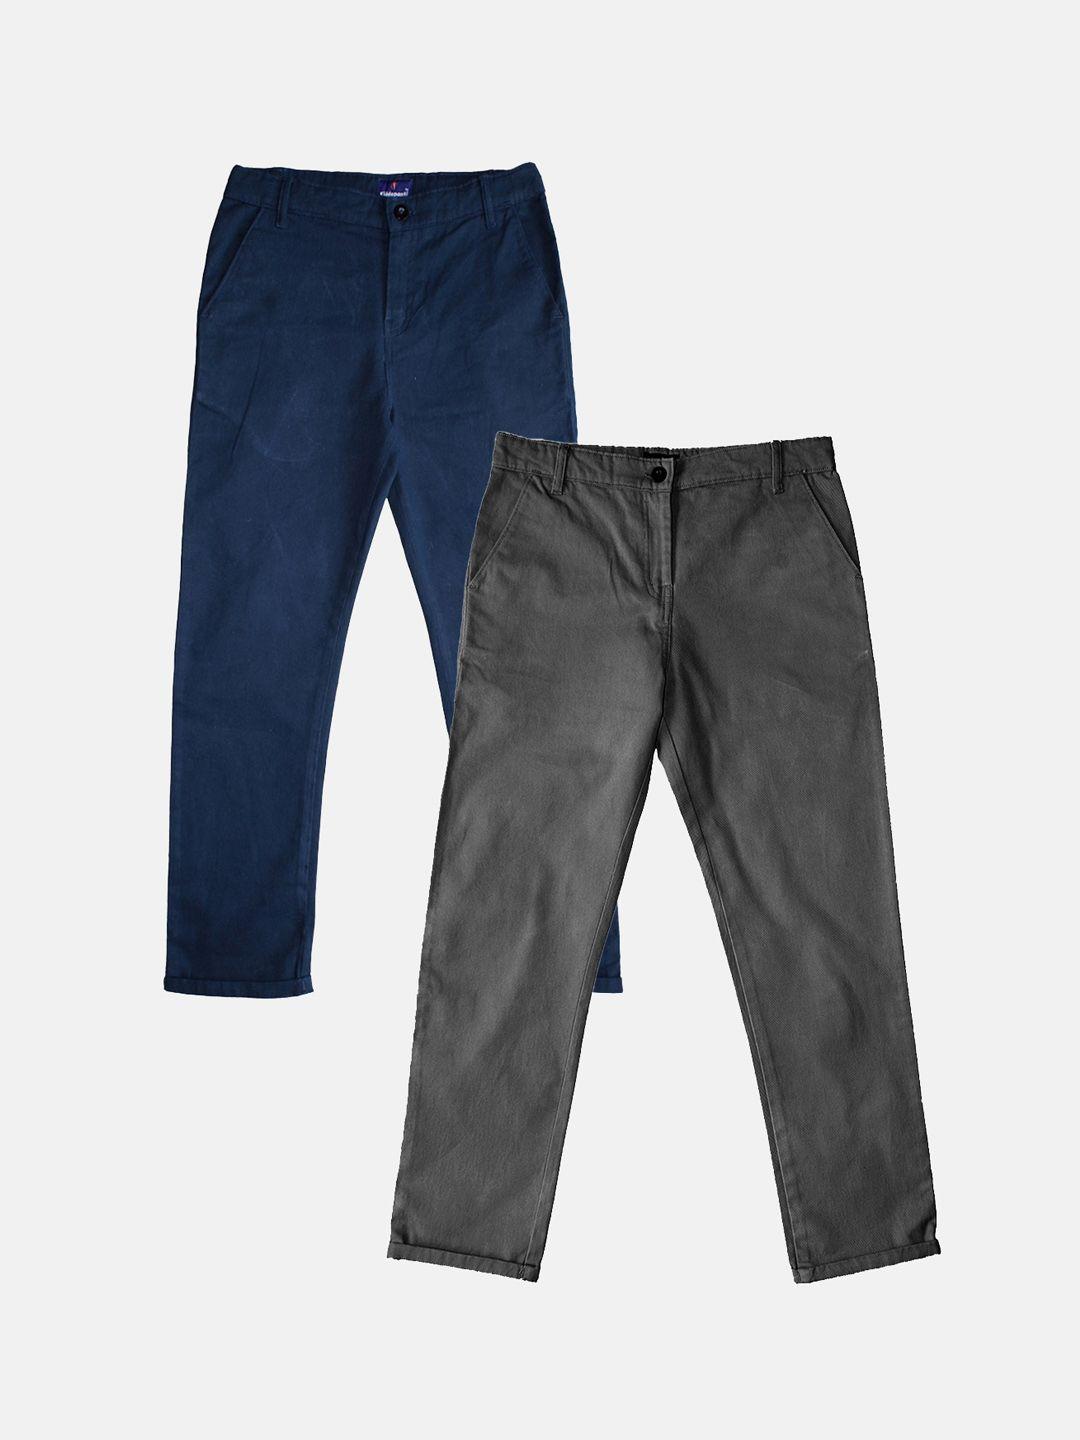 kiddopanti-boys-pack-of-2-mid-rise-plain-cotton-chinos-trousers